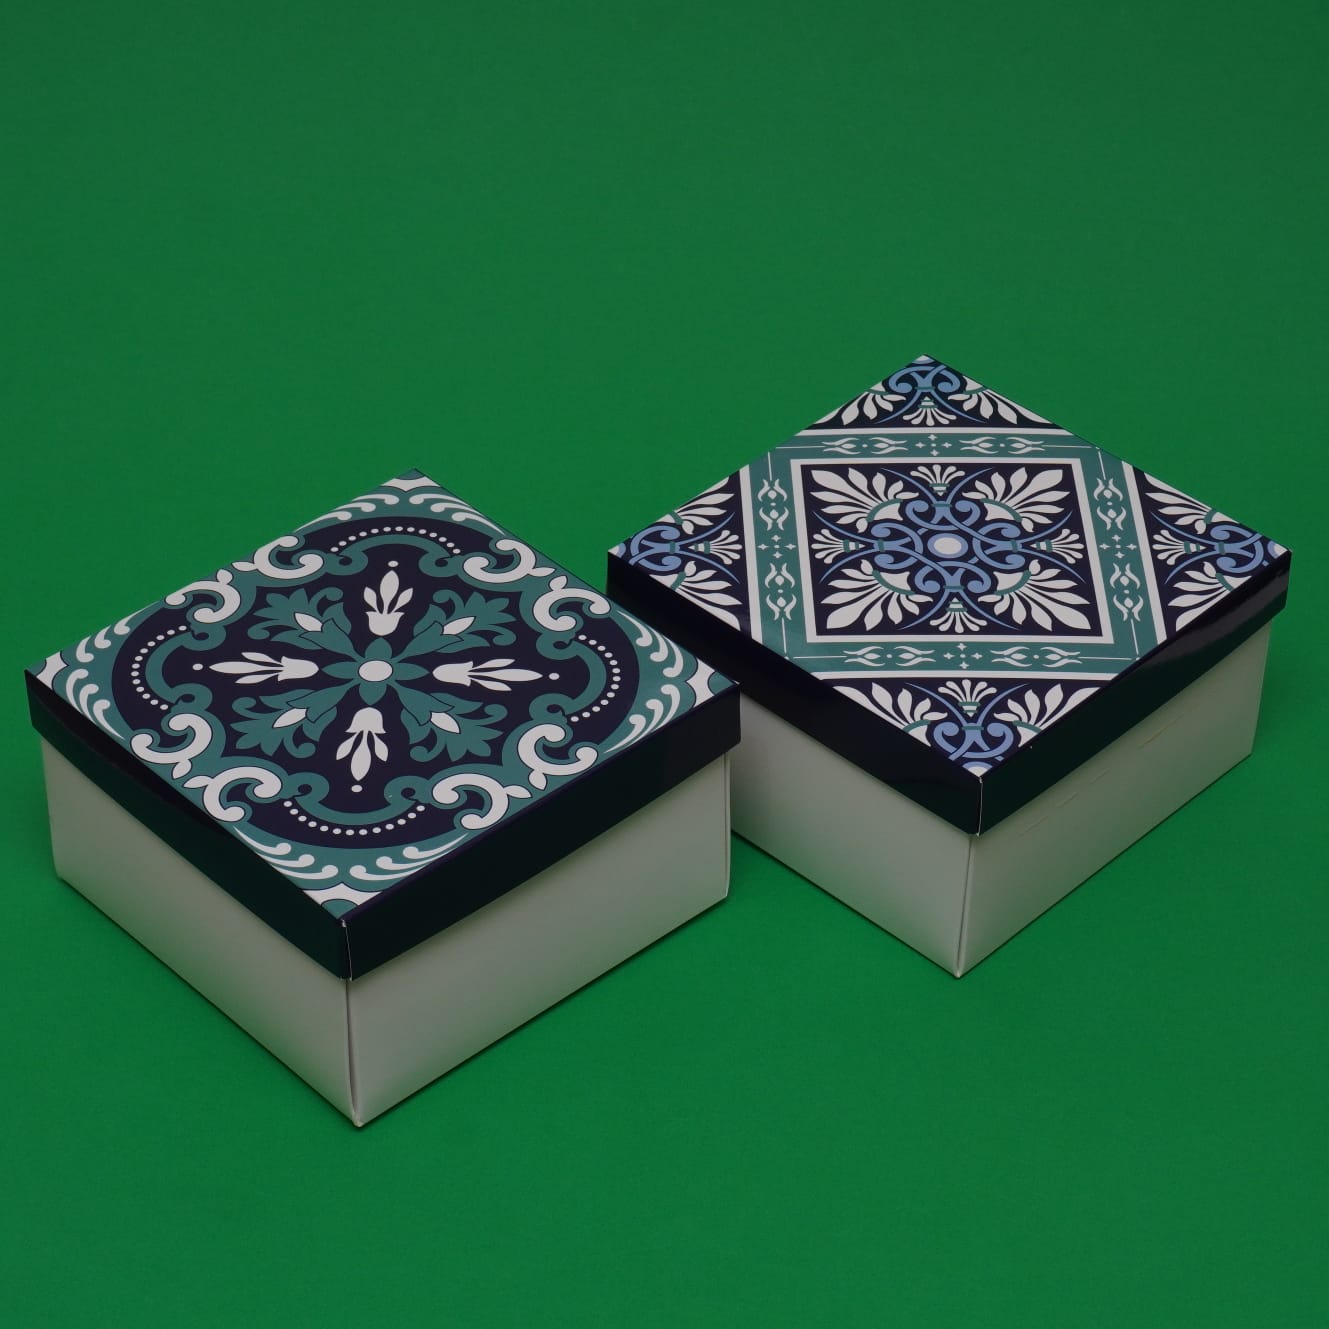 Morrocco Green Boxes